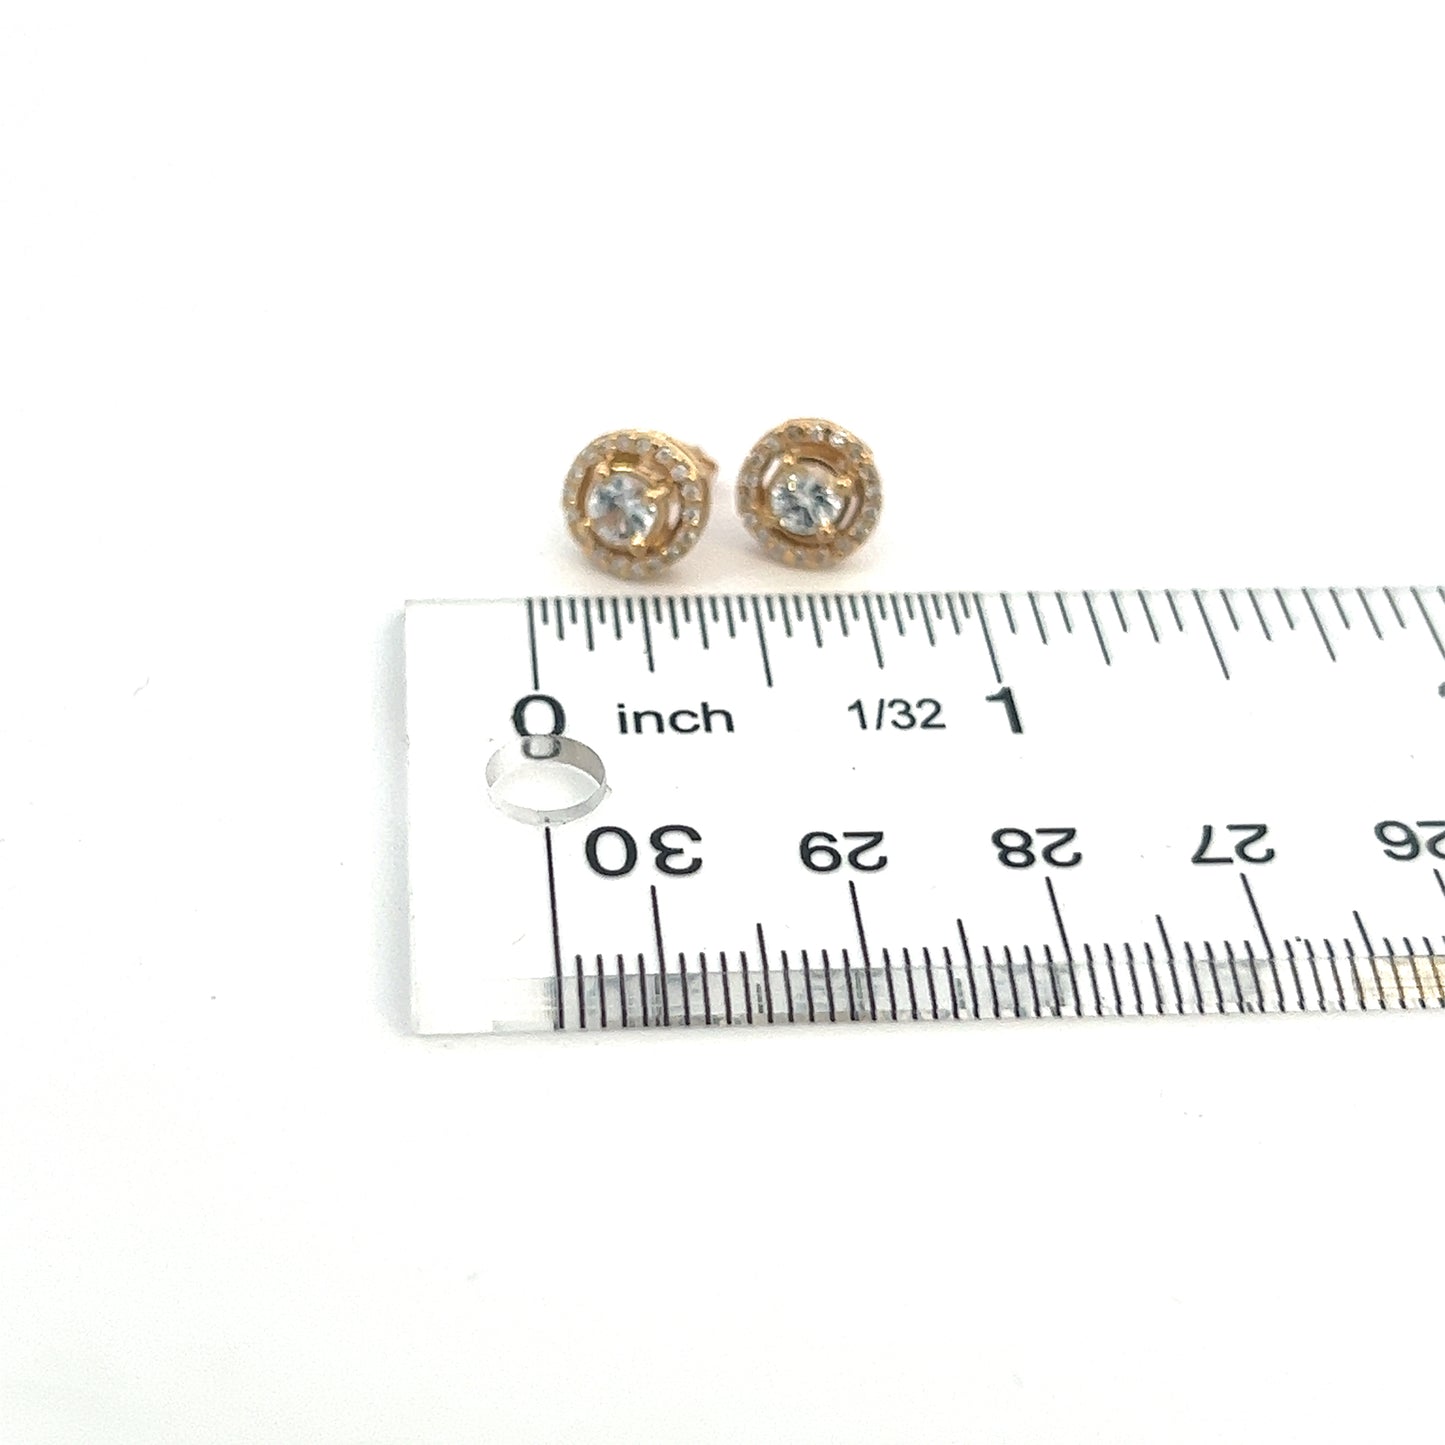 Natural White Sapphire Diamond Stud Earrings 14k Yellow Gold 0.97 TCW Certified $3,075 216092 - Certified Fine Jewelry